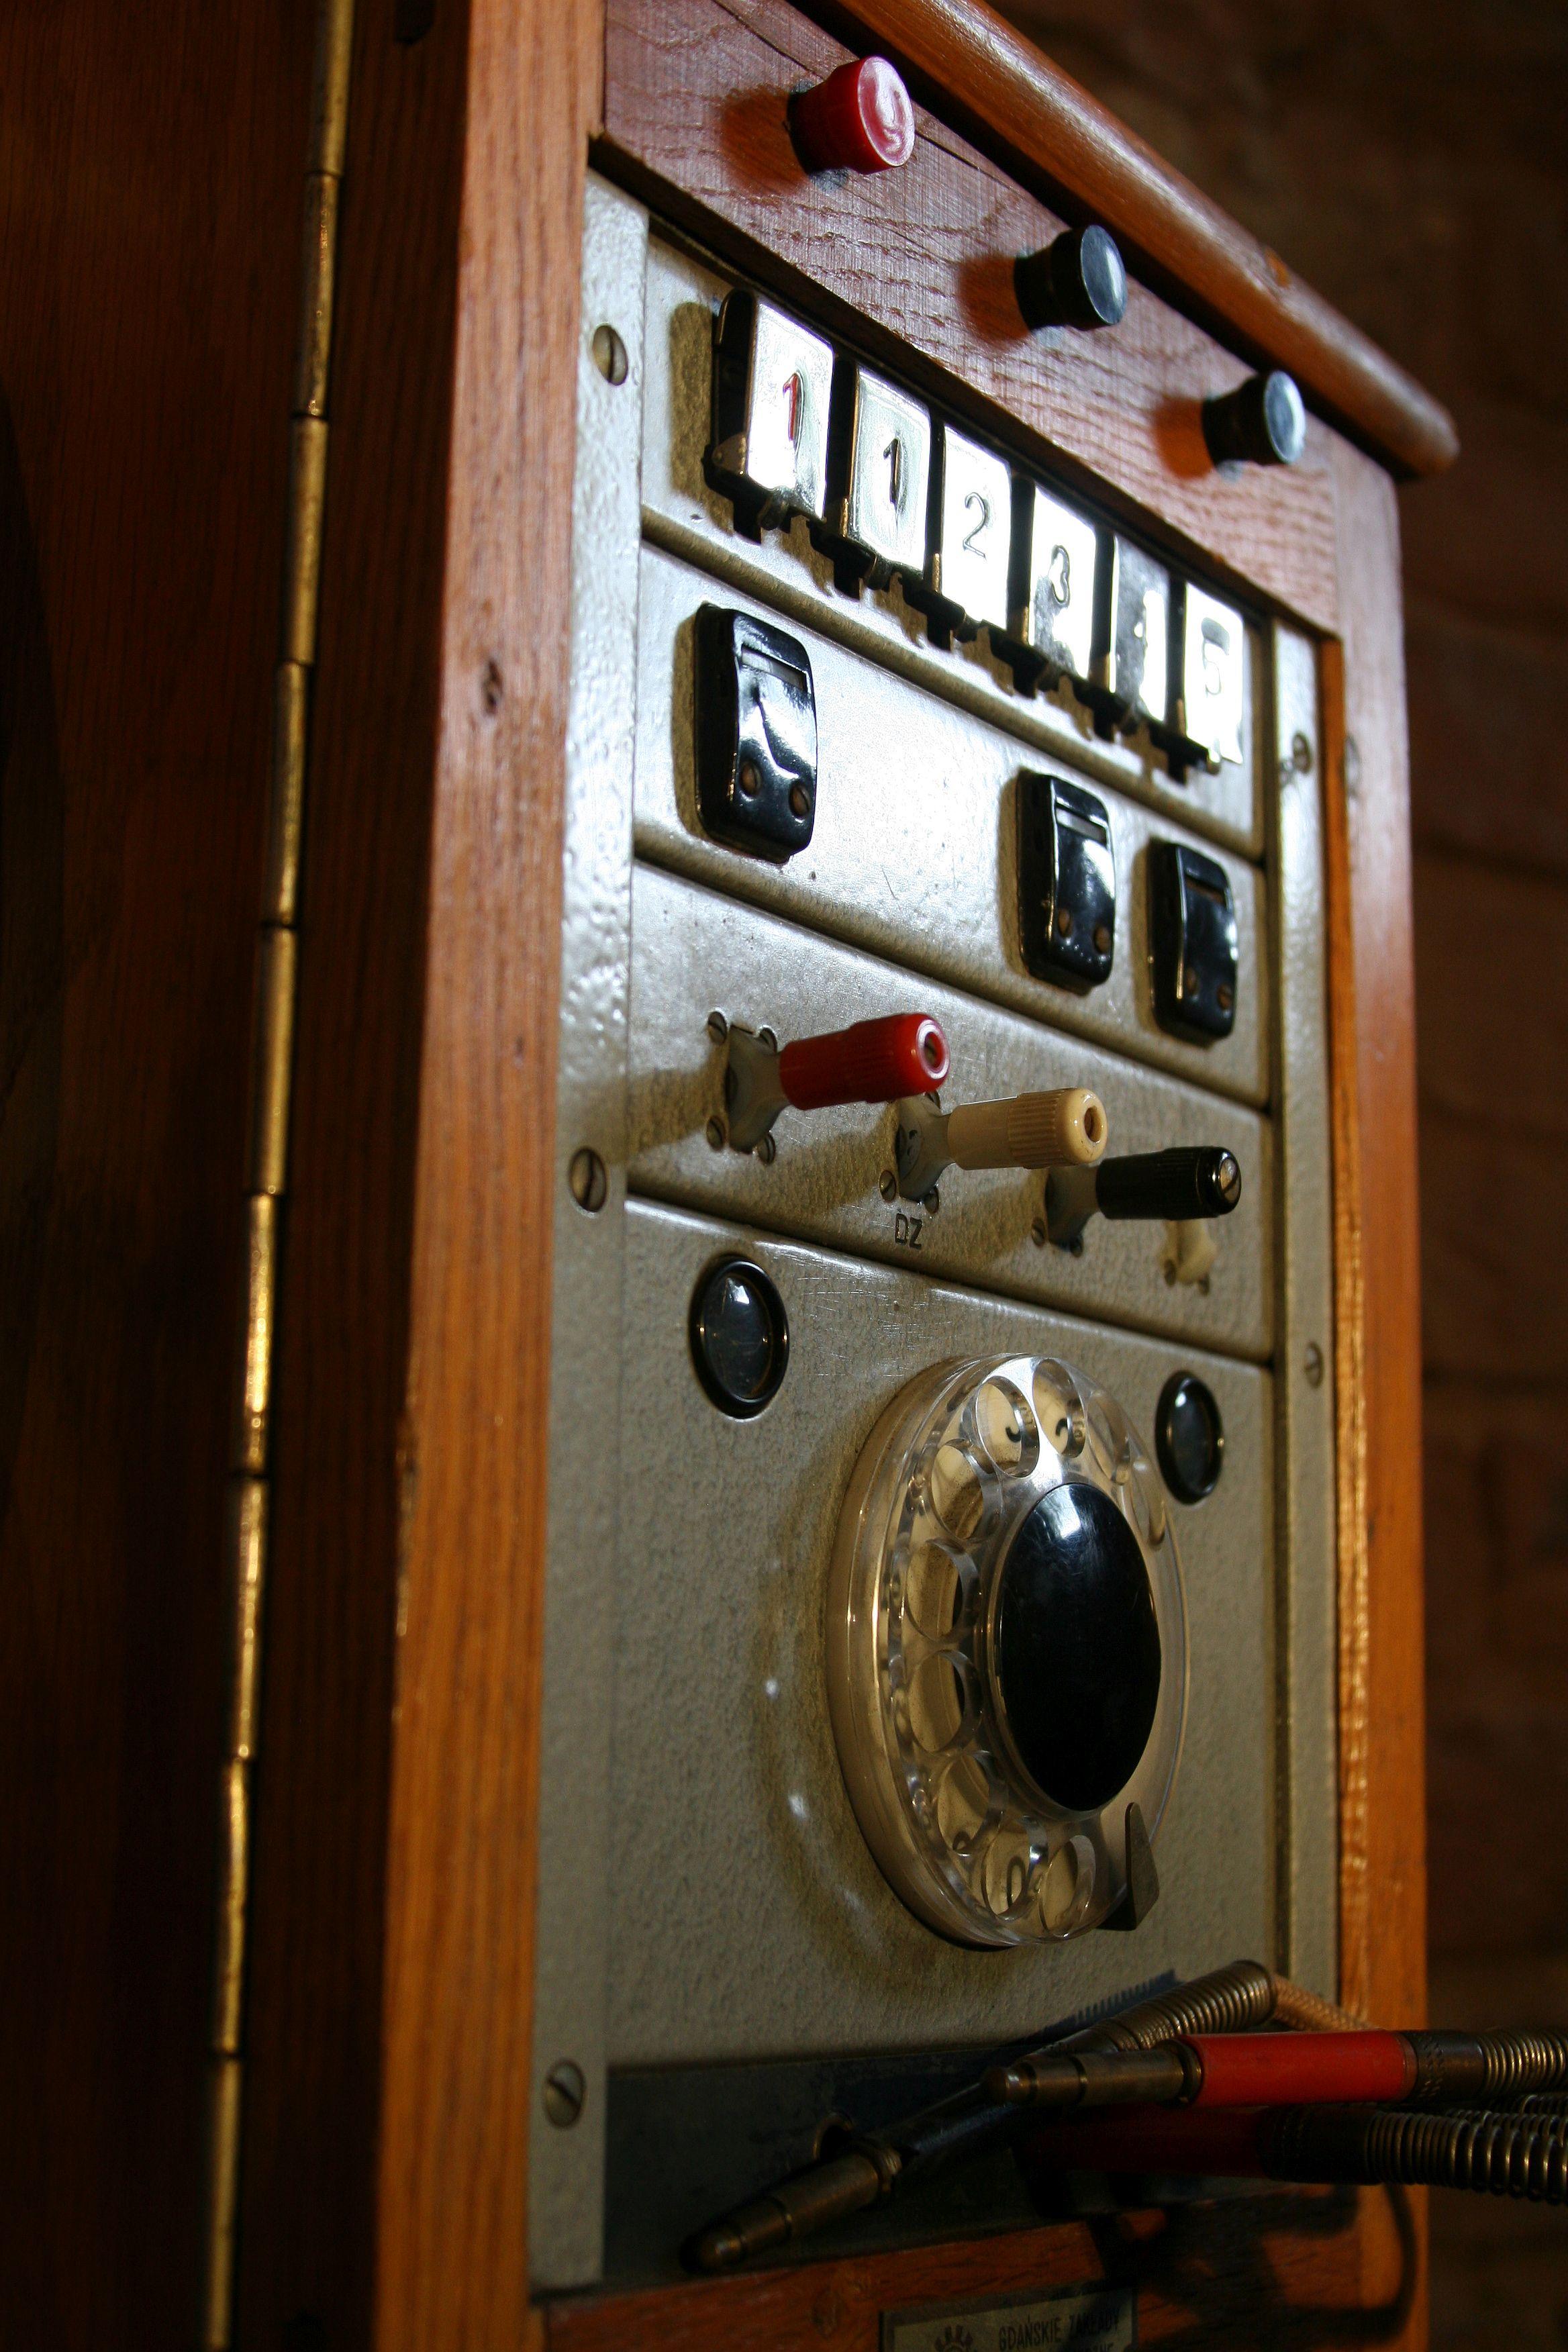 1960s Vintage Industrial Telephone Exchange Model CB-5 For Sale 1